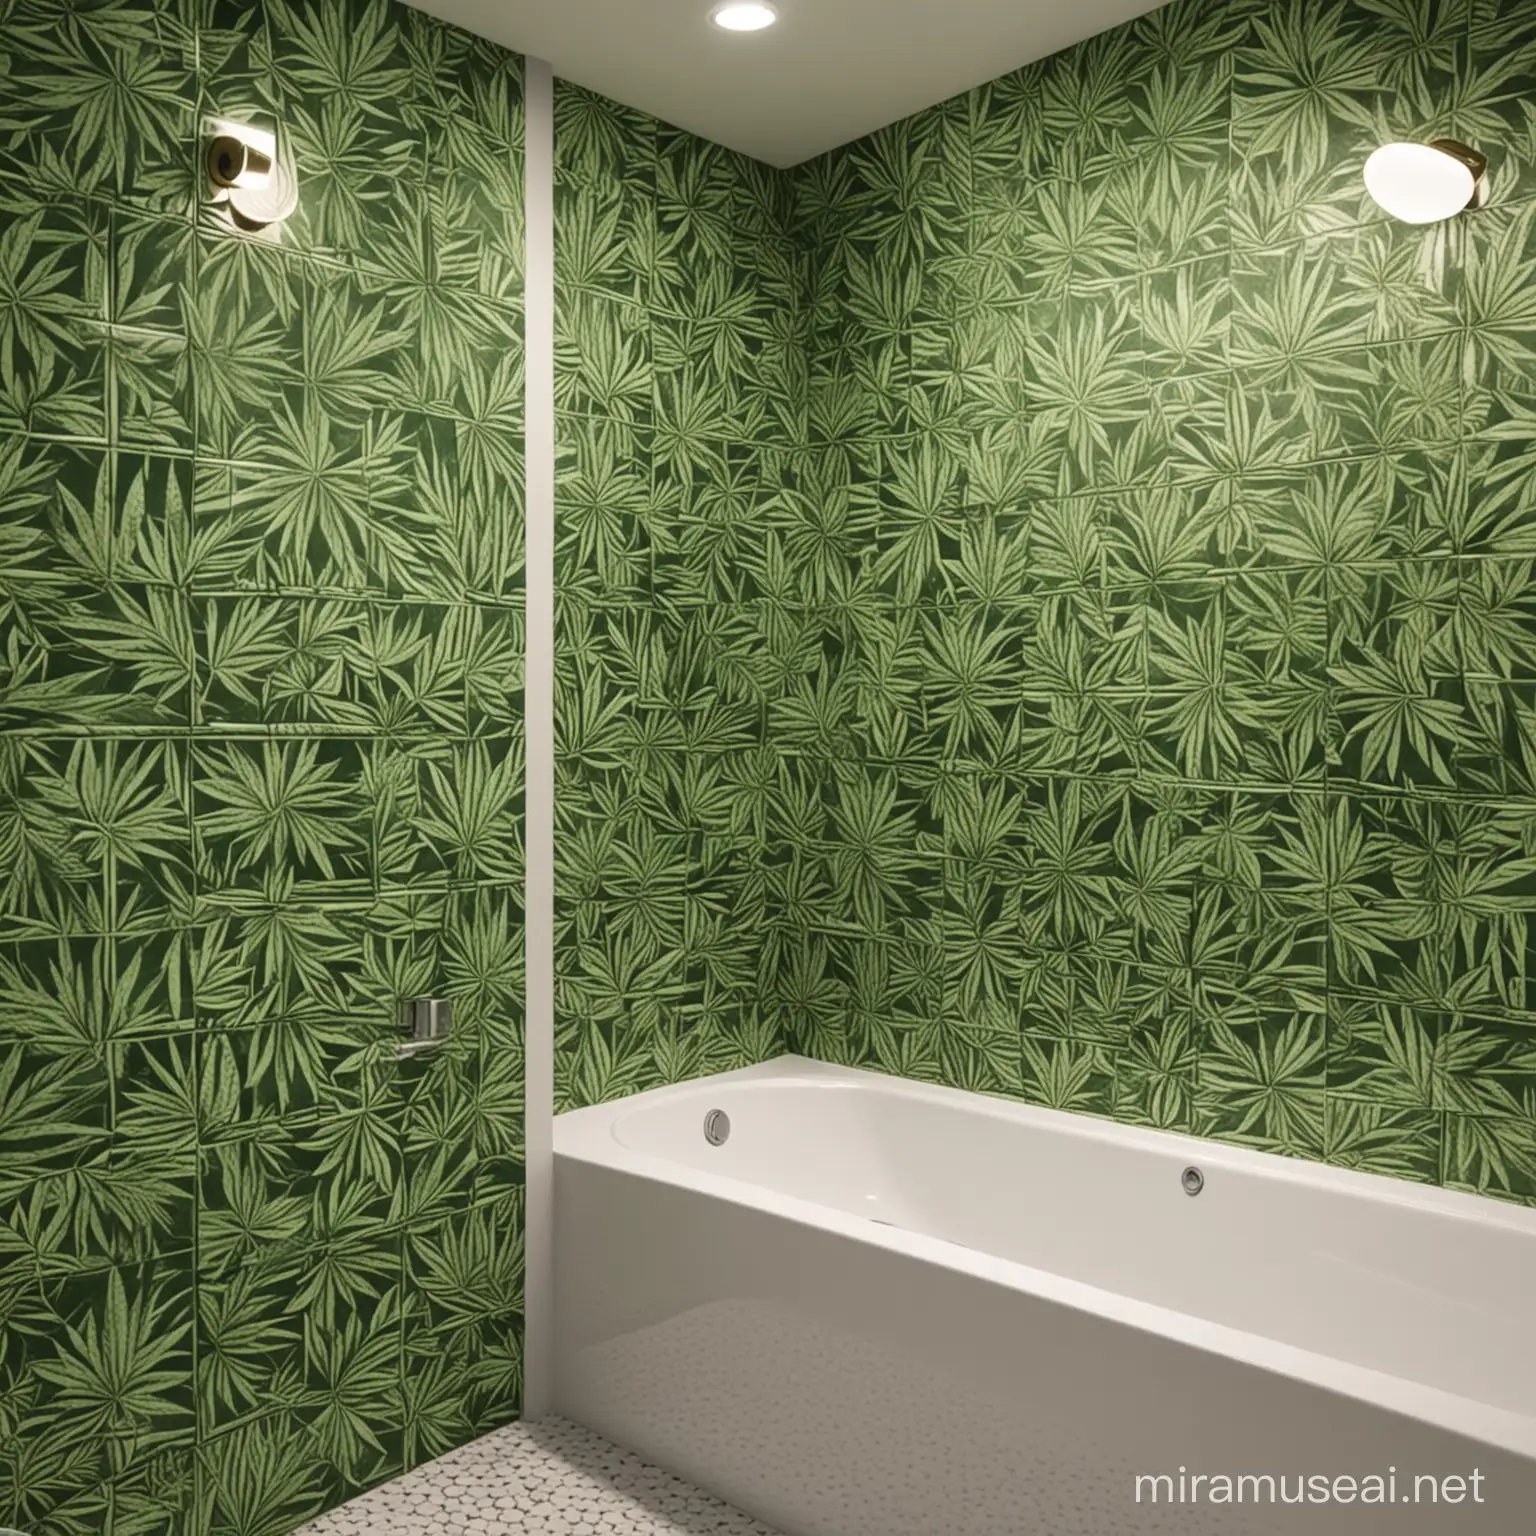 Modern Bathroom with Green Cannabis Leaf Decor Tiles